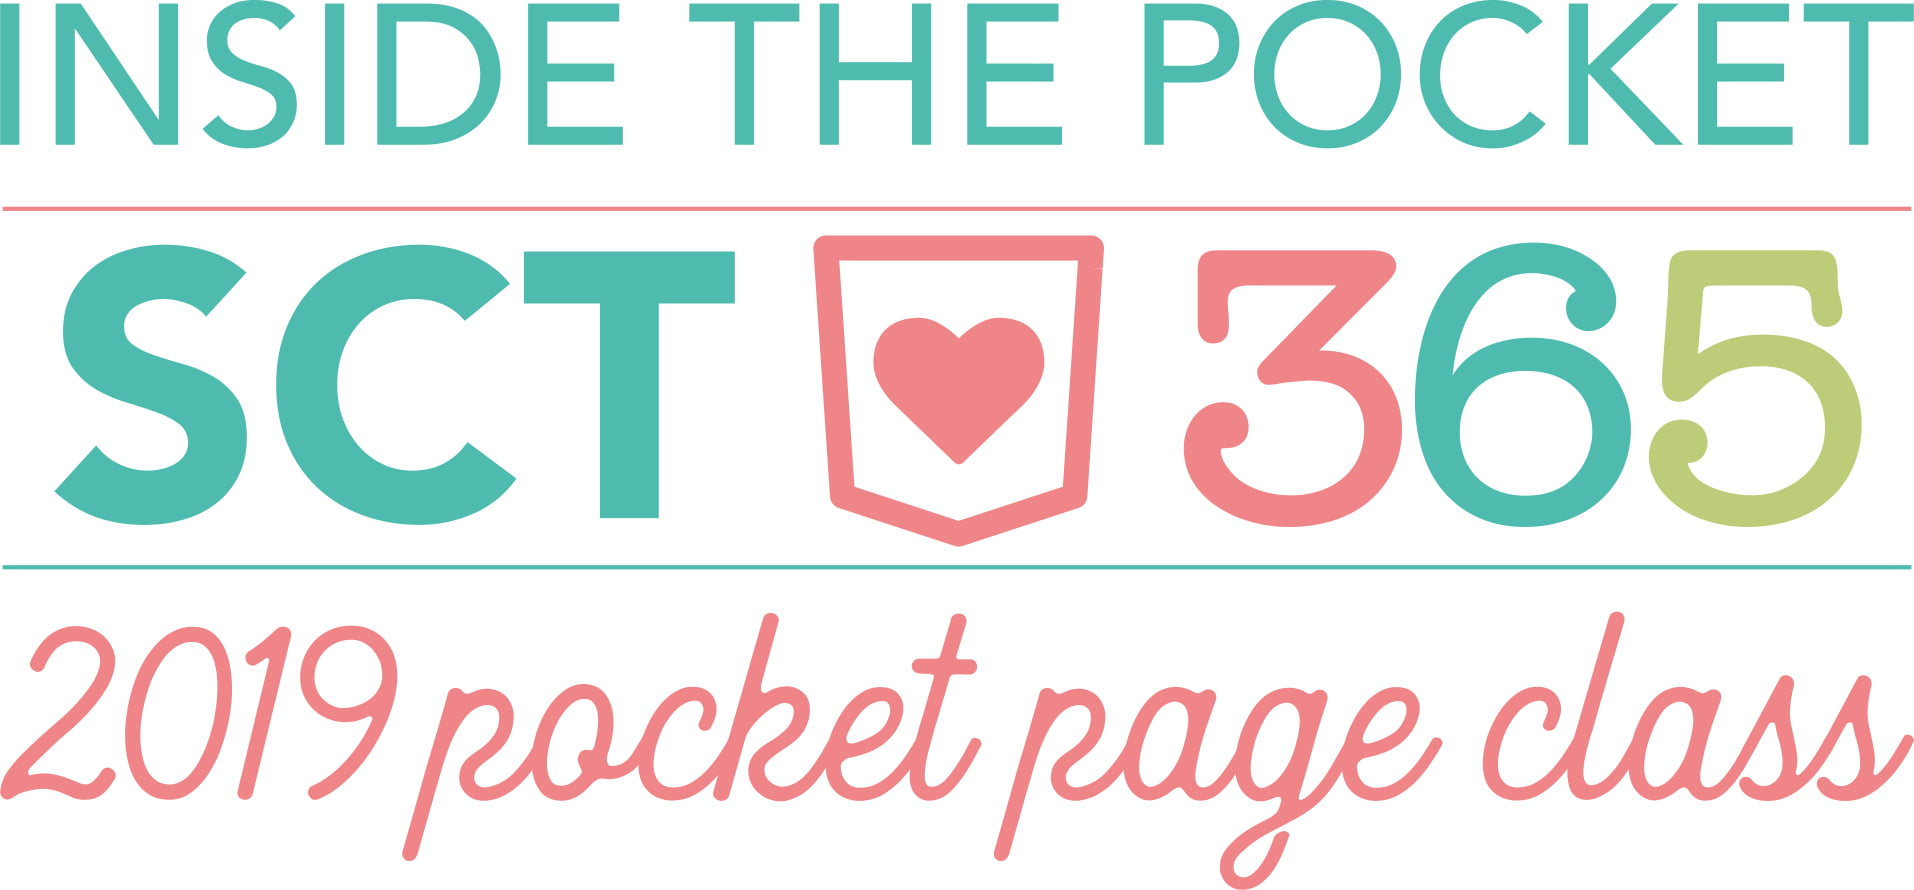 SCT 365 2019 Inside The Pocket Online Class Logo